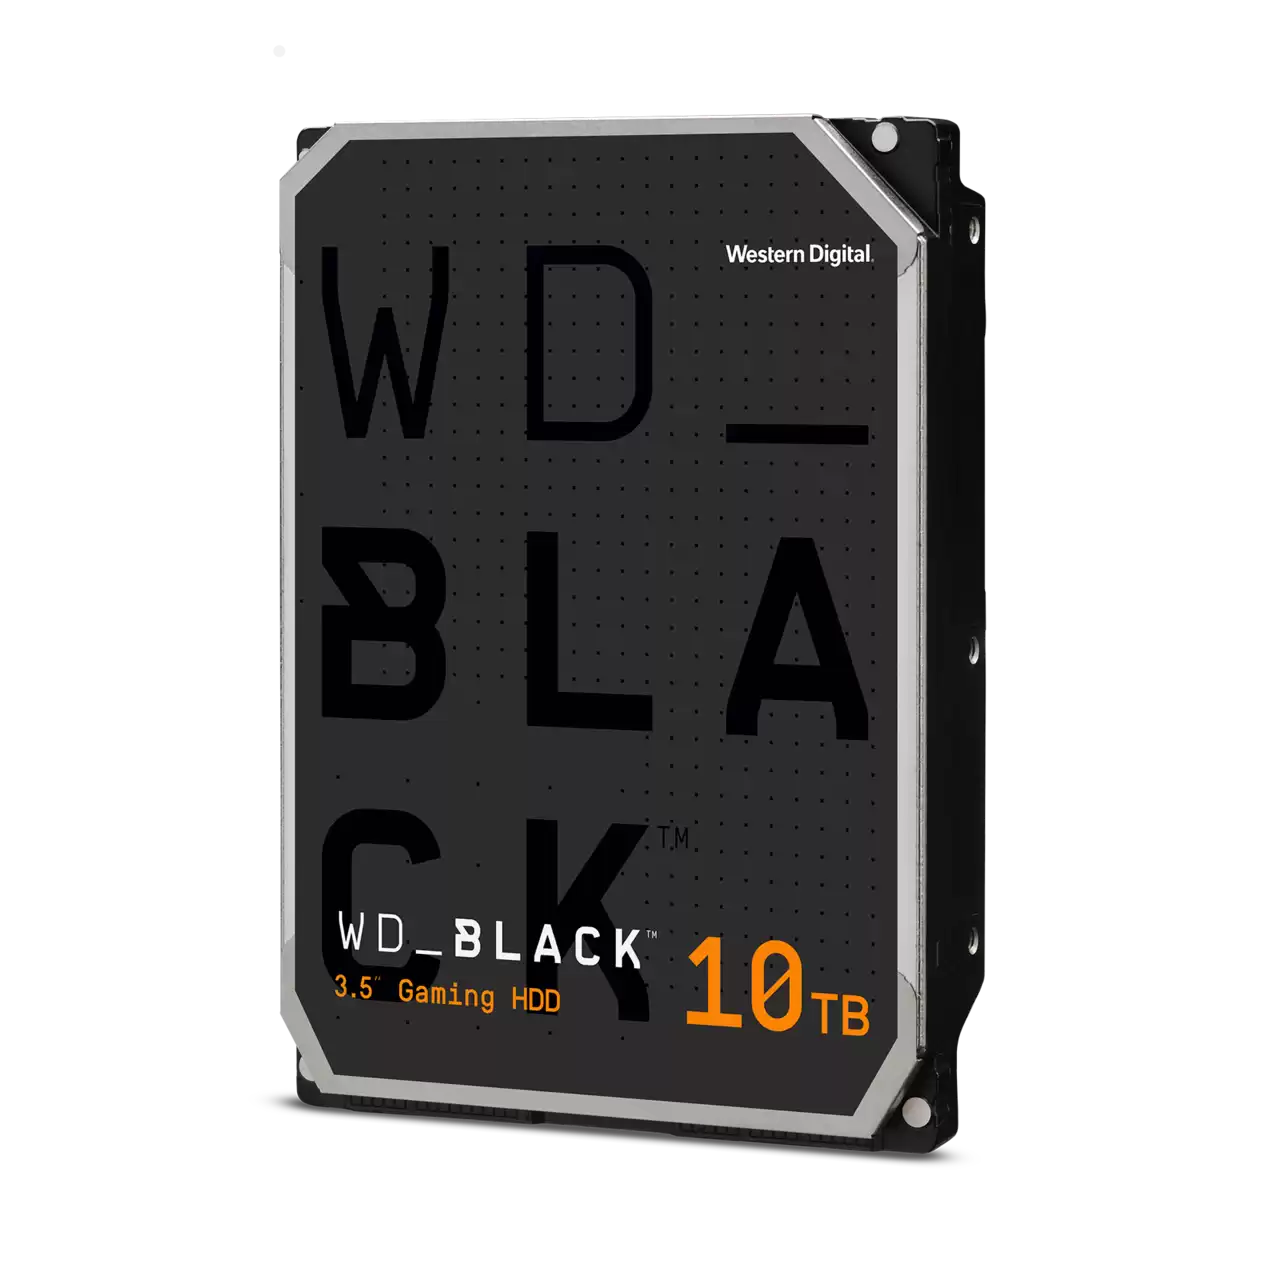 WD Black 10 TB Performance Desktop HDD WD101FZBX-hdd-WESTERN DIGITAL-computerspace